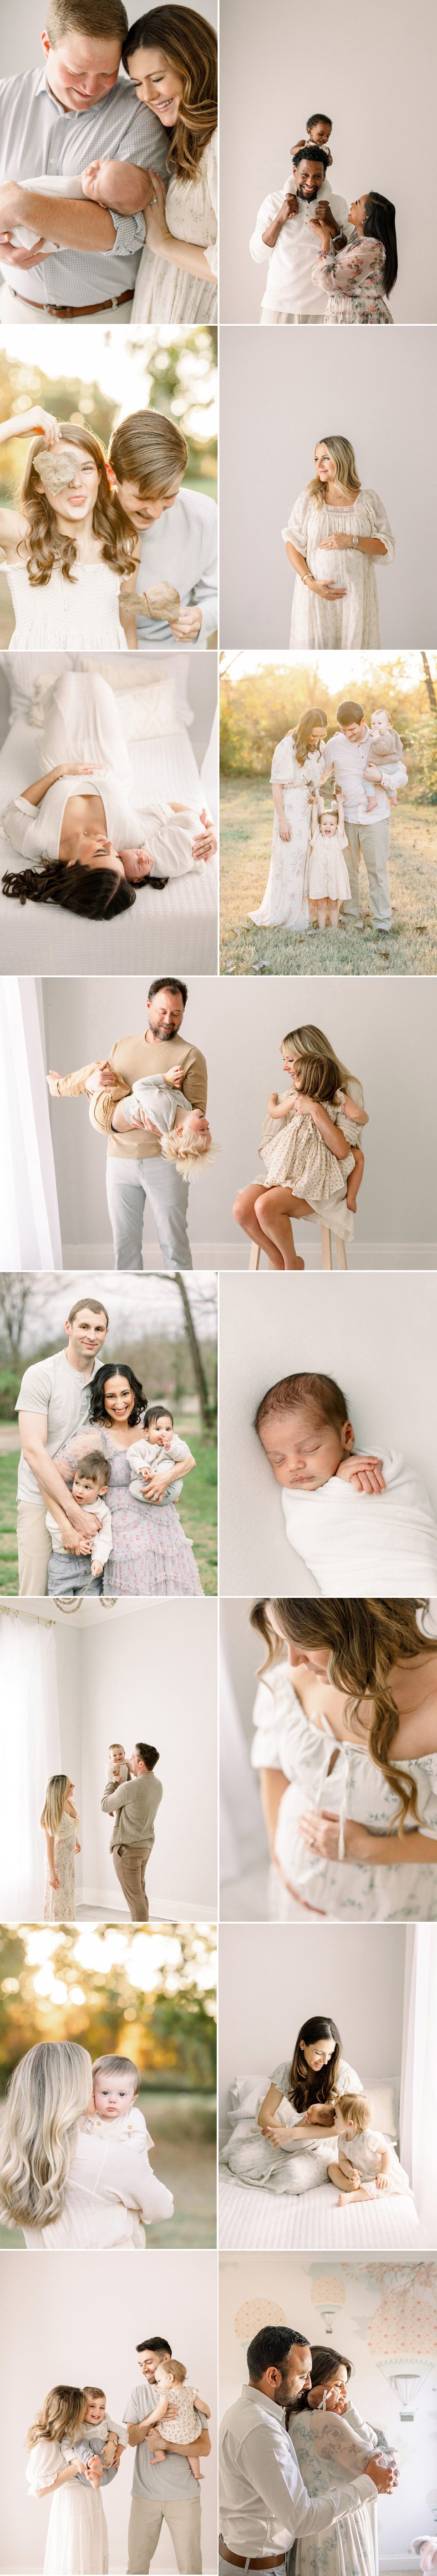 family newborn photography 